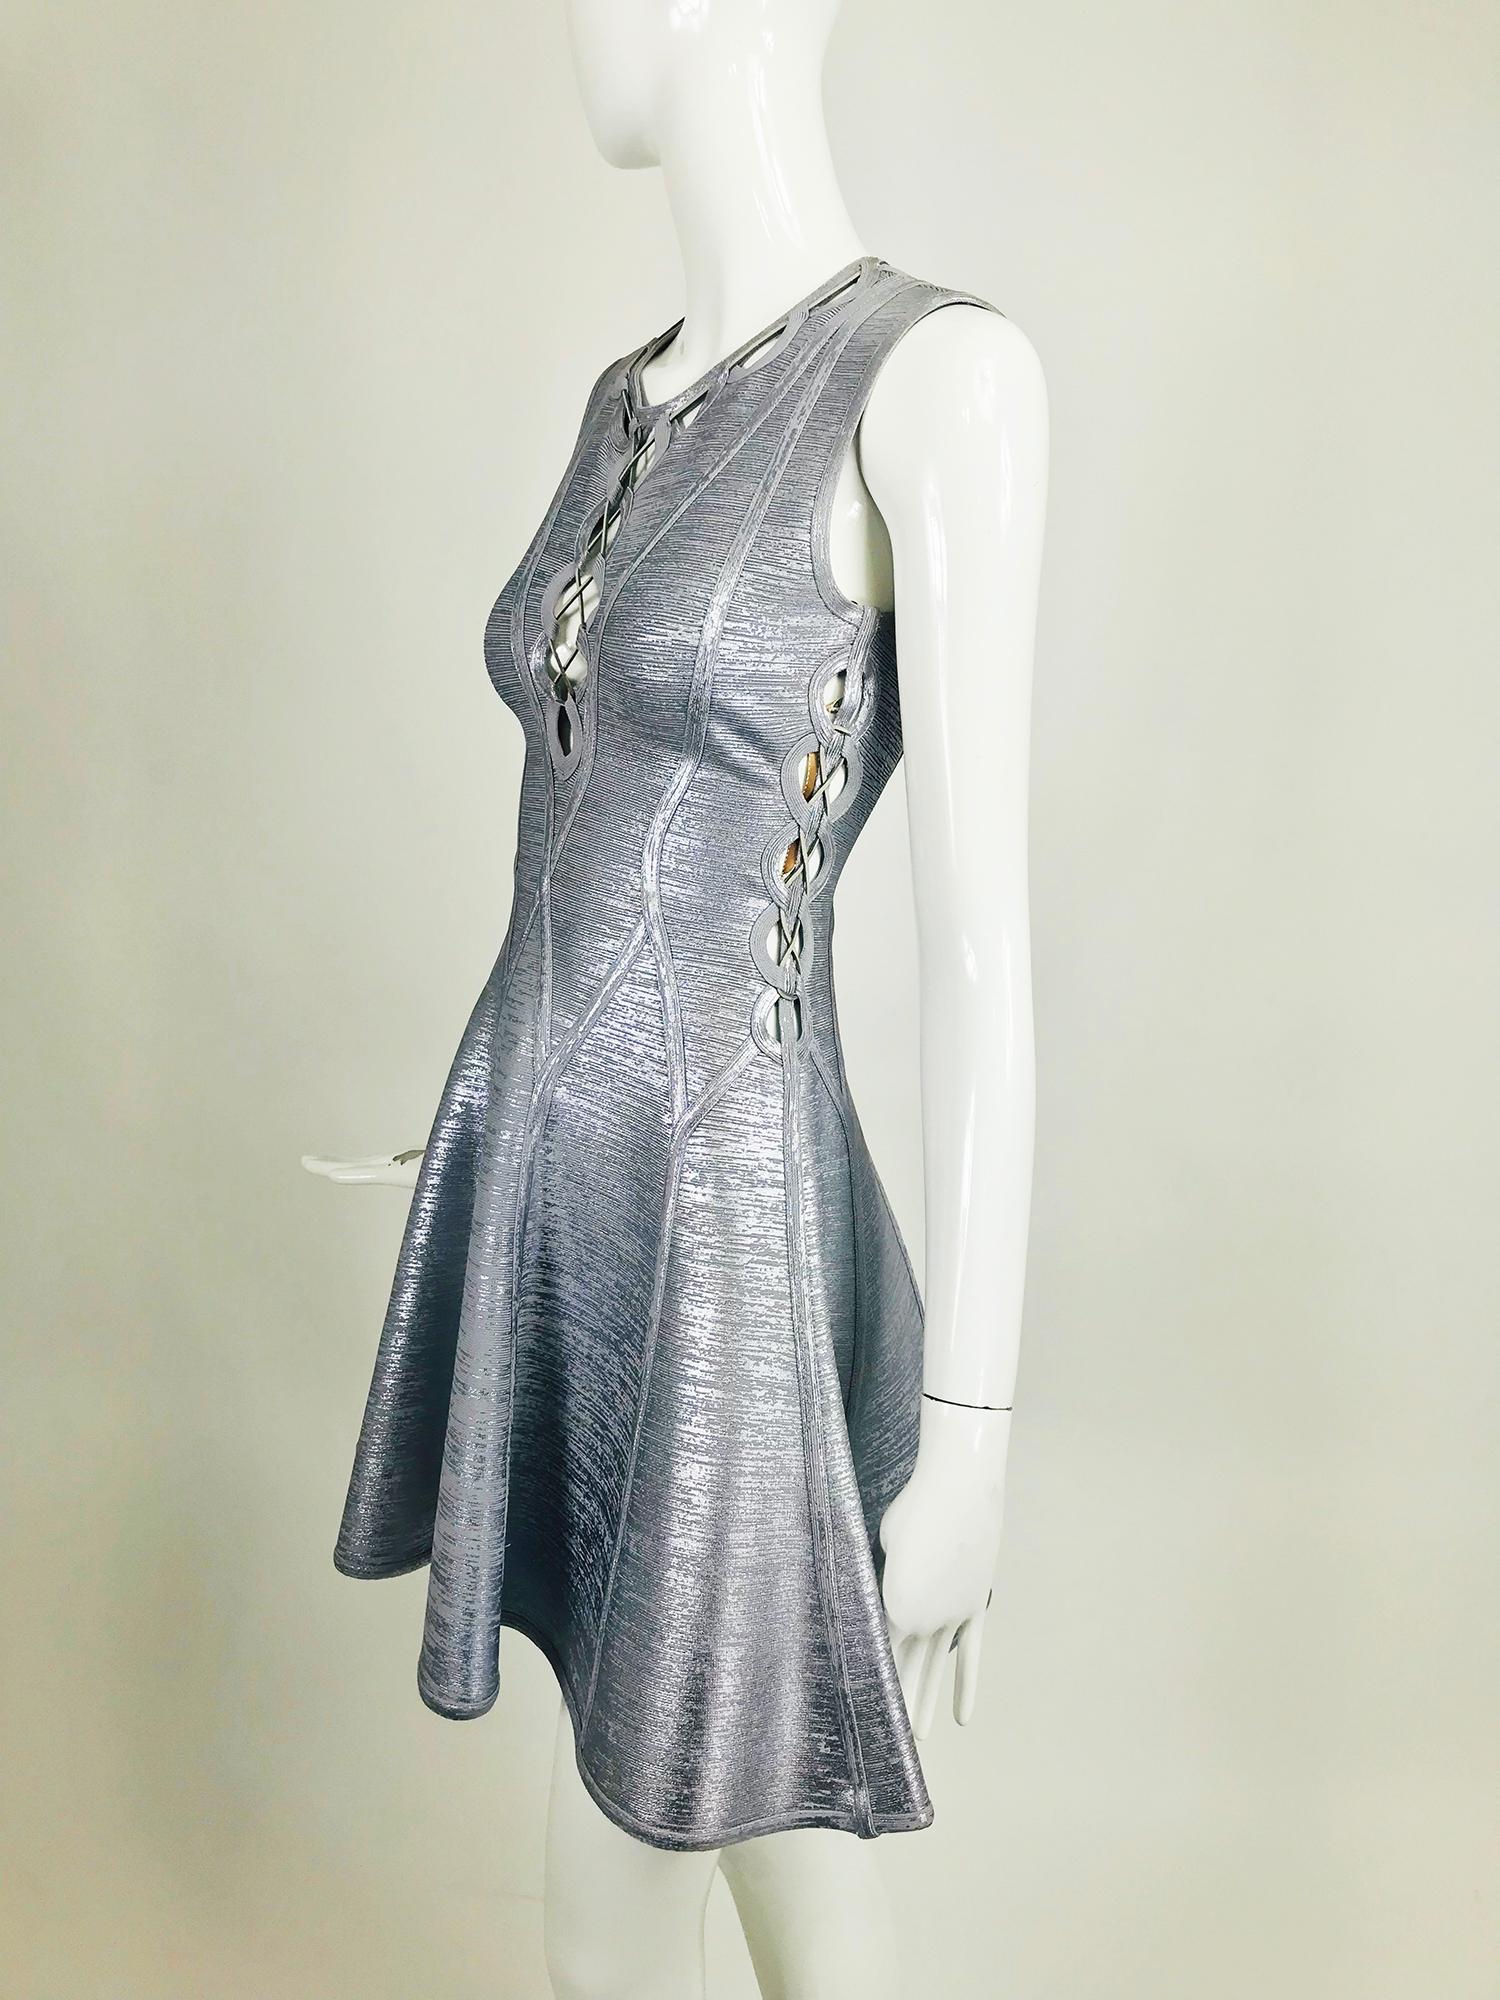 Herve Leger Silver Lavender Metallic Foil Lace Up Fit and Flare Bandage Dress 6